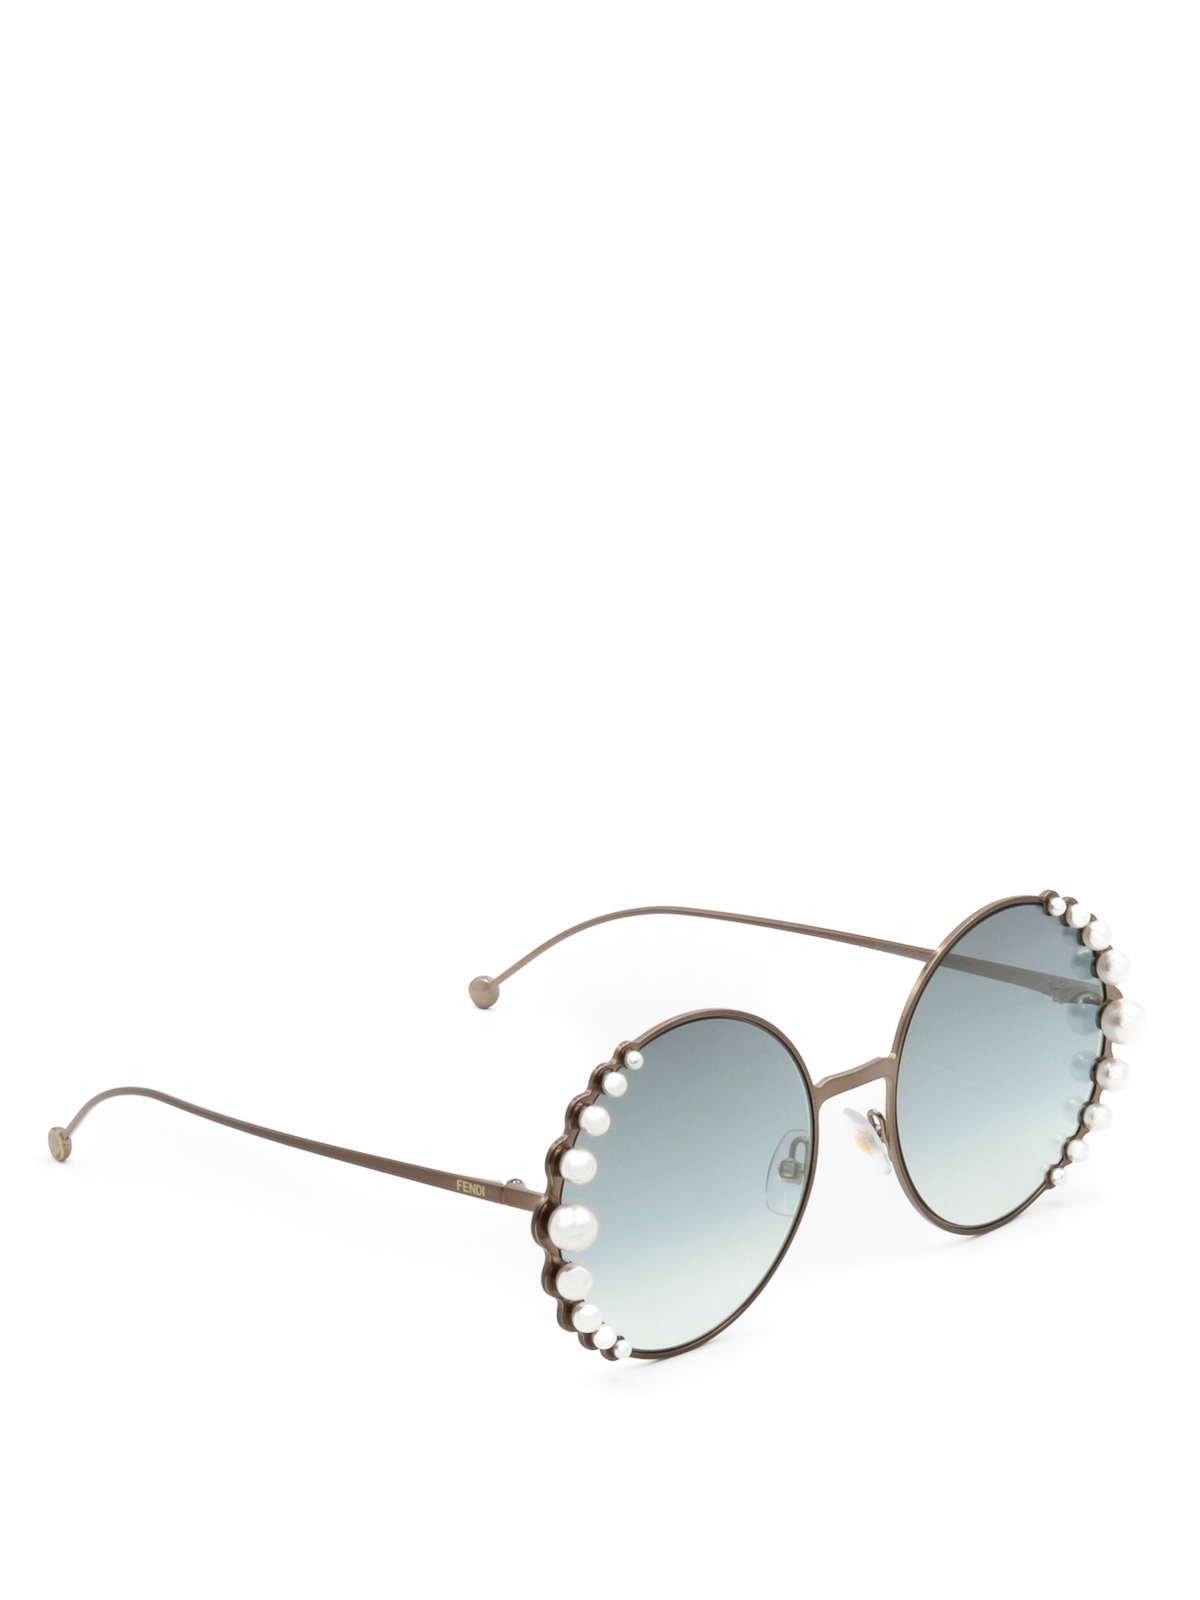 fendi ribbons and pearls sunglasses